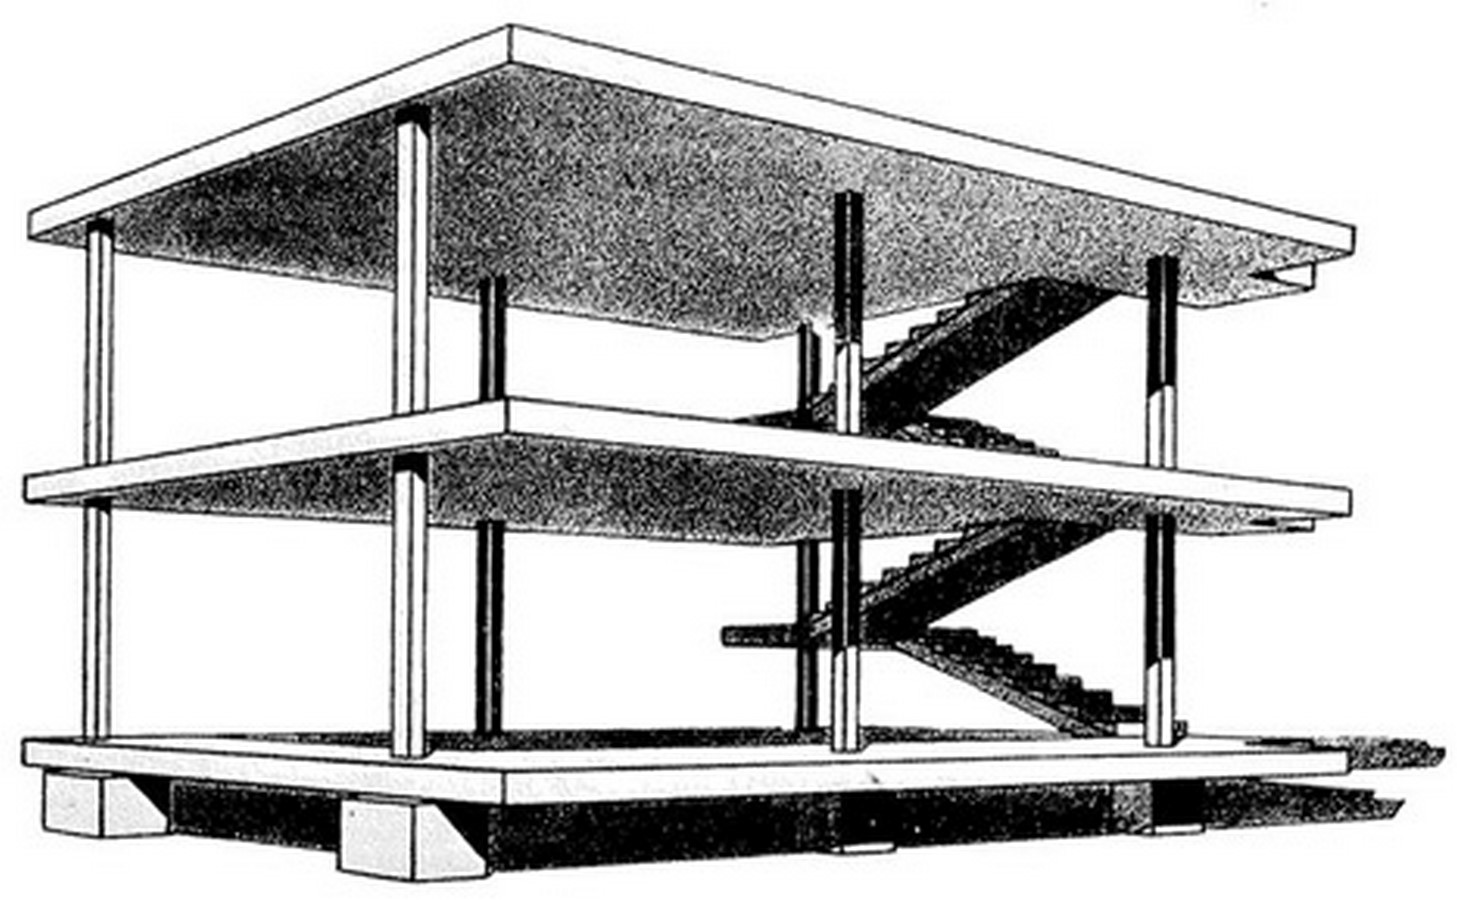 A2133 Understanding The Design Philosophy Of Le Corbusier Image 2 